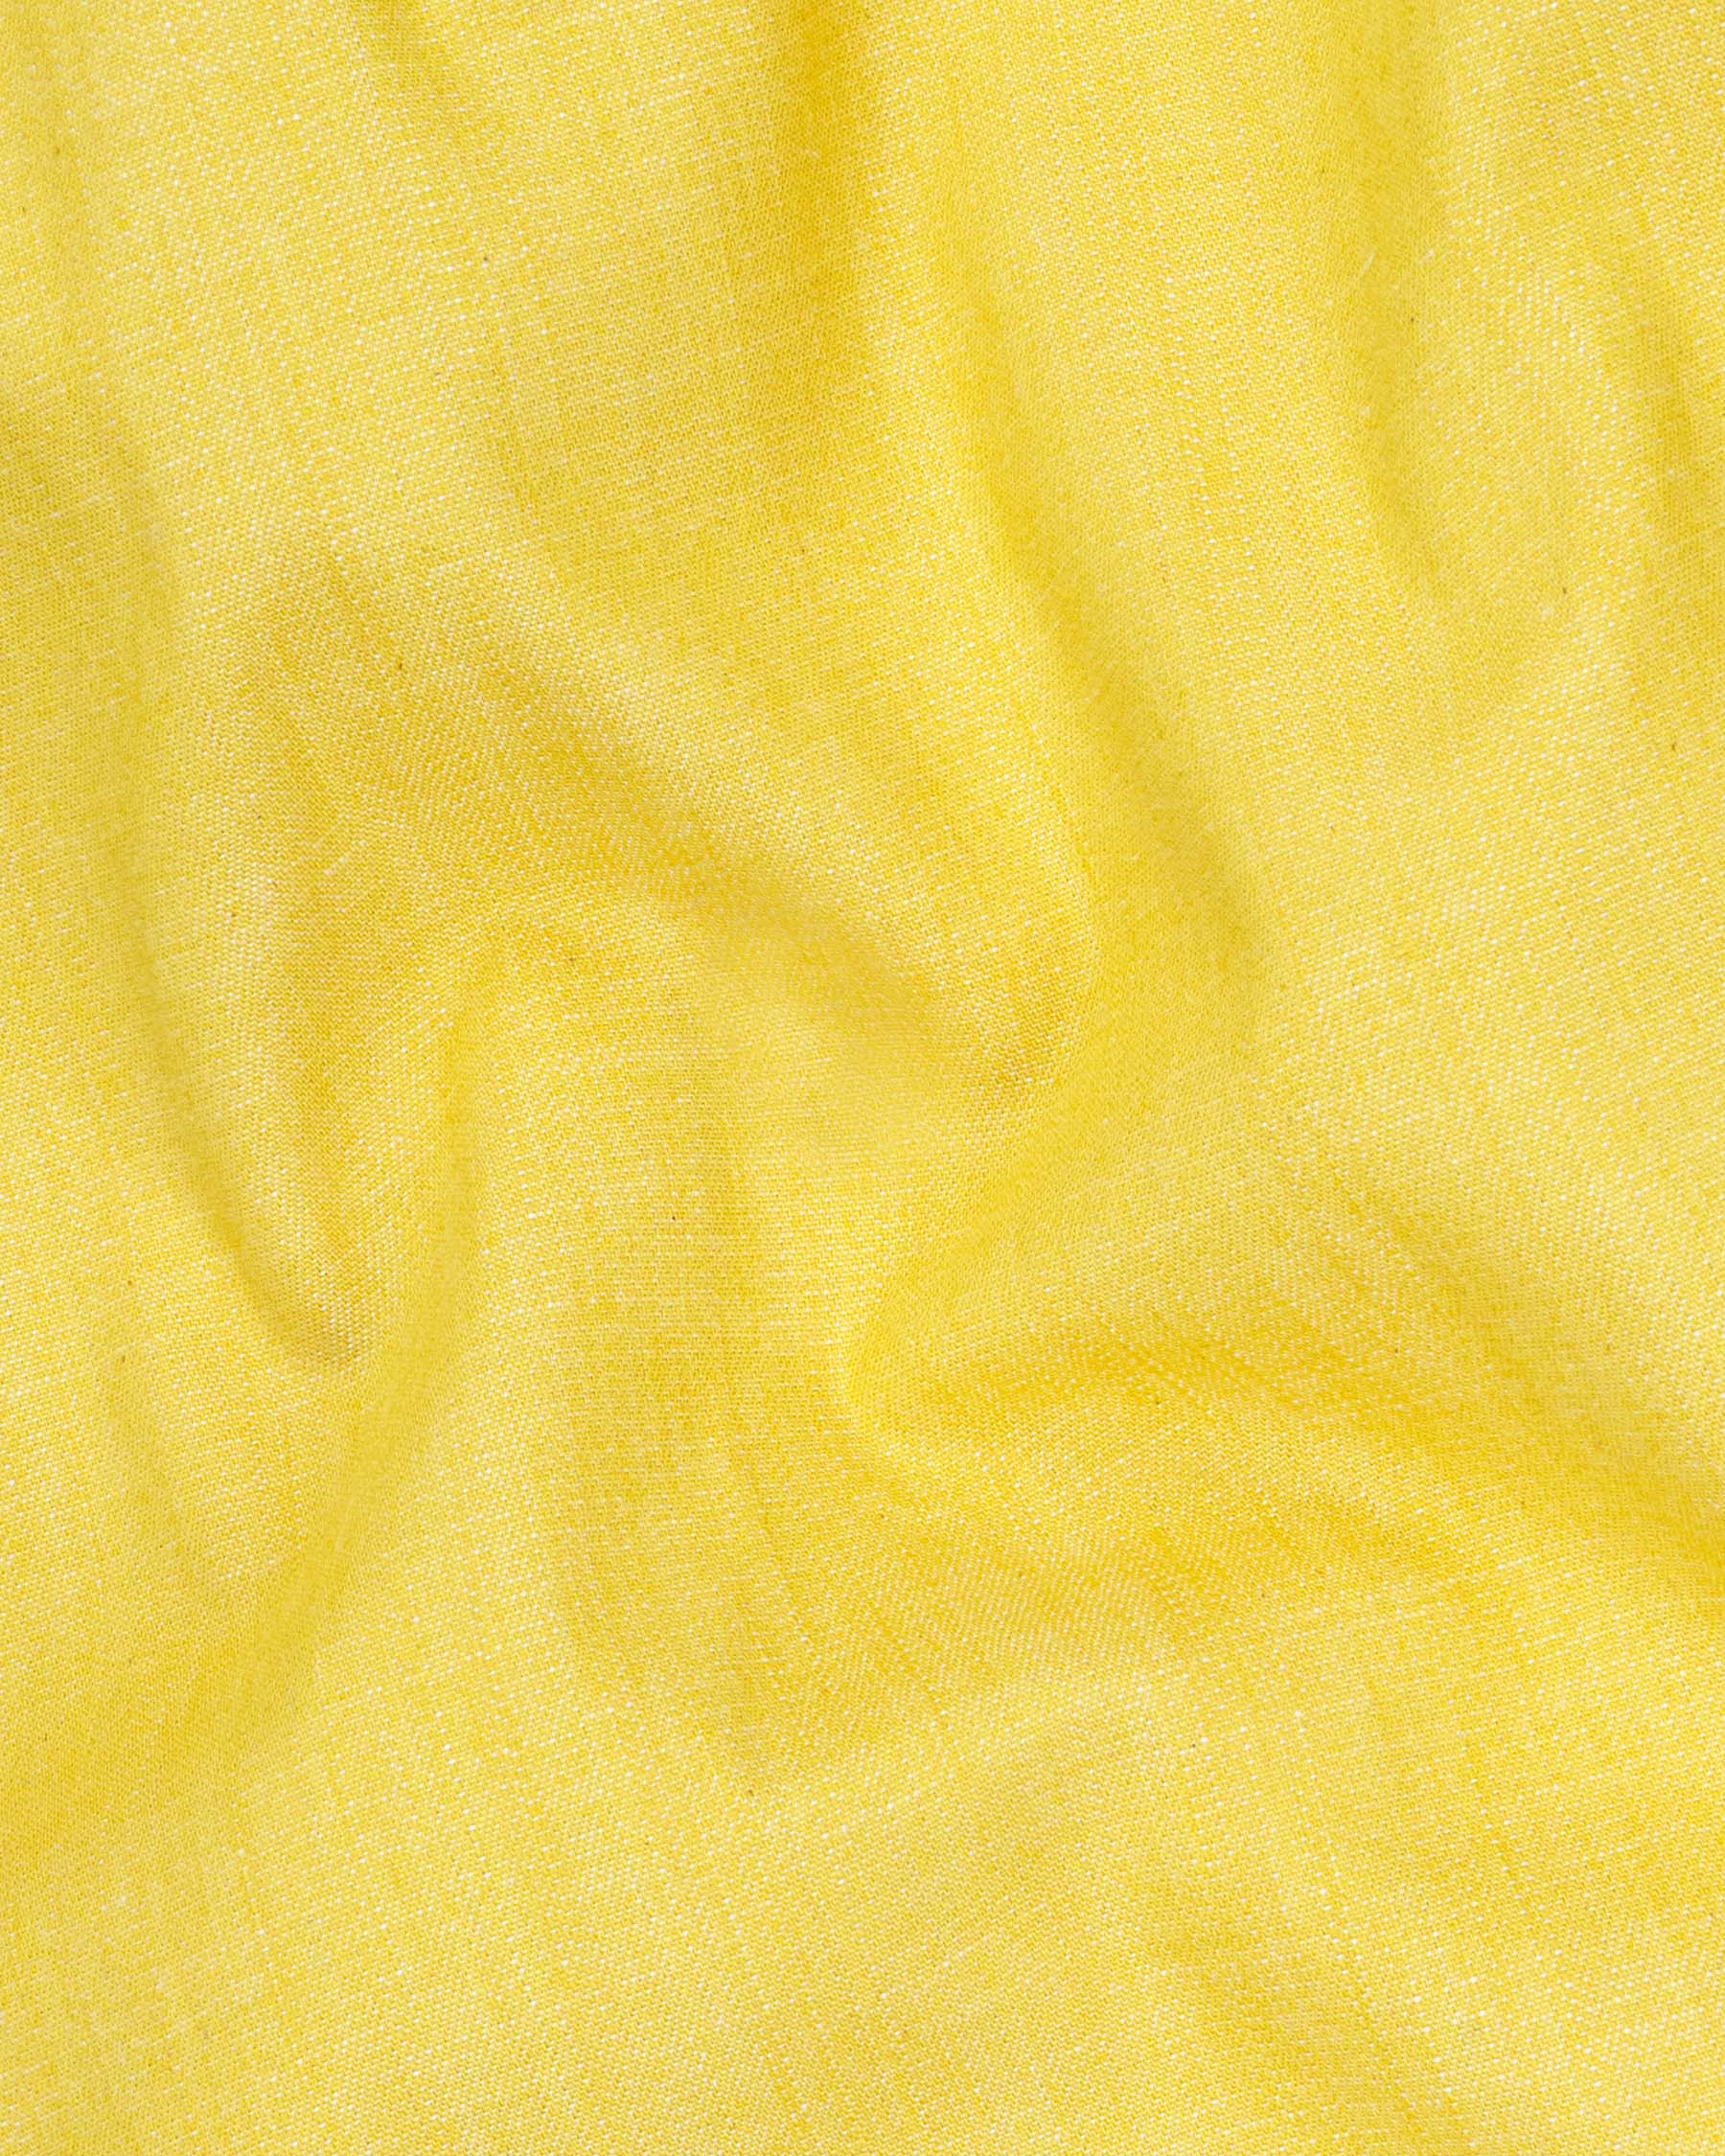 Light Mustard Yellow heavyweight Zipper Closure Royal Oxford Overshirt 6921-P75-38,6921-P75-38,6921-P75-39,6921-P75-39,6921-P75-40,6921-P75-40,6921-P75-42,6921-P75-42,6921-P75-44,6921-P75-44,6921-P75-46,6921-P75-46,6921-P75-48,6921-P75-48,6921-P75-50,6921-P75-50,6921-P75-52,6921-P75-52